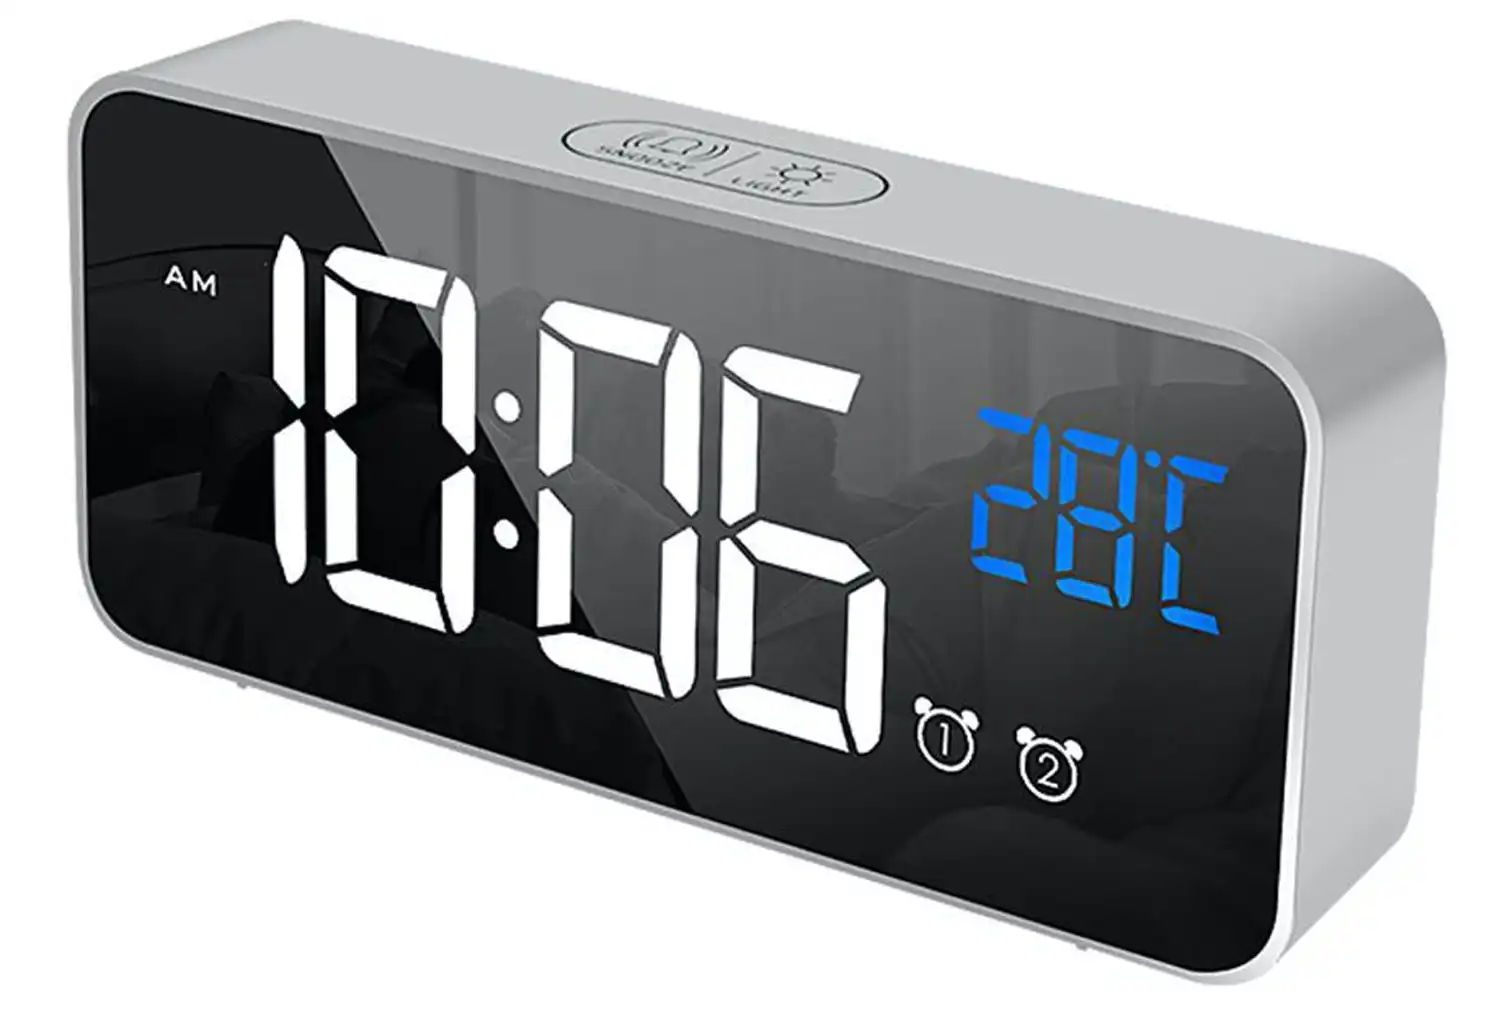 TODO LED Digital Alarm Clock Temperature Music Alarm USB Rechargeable - Silver